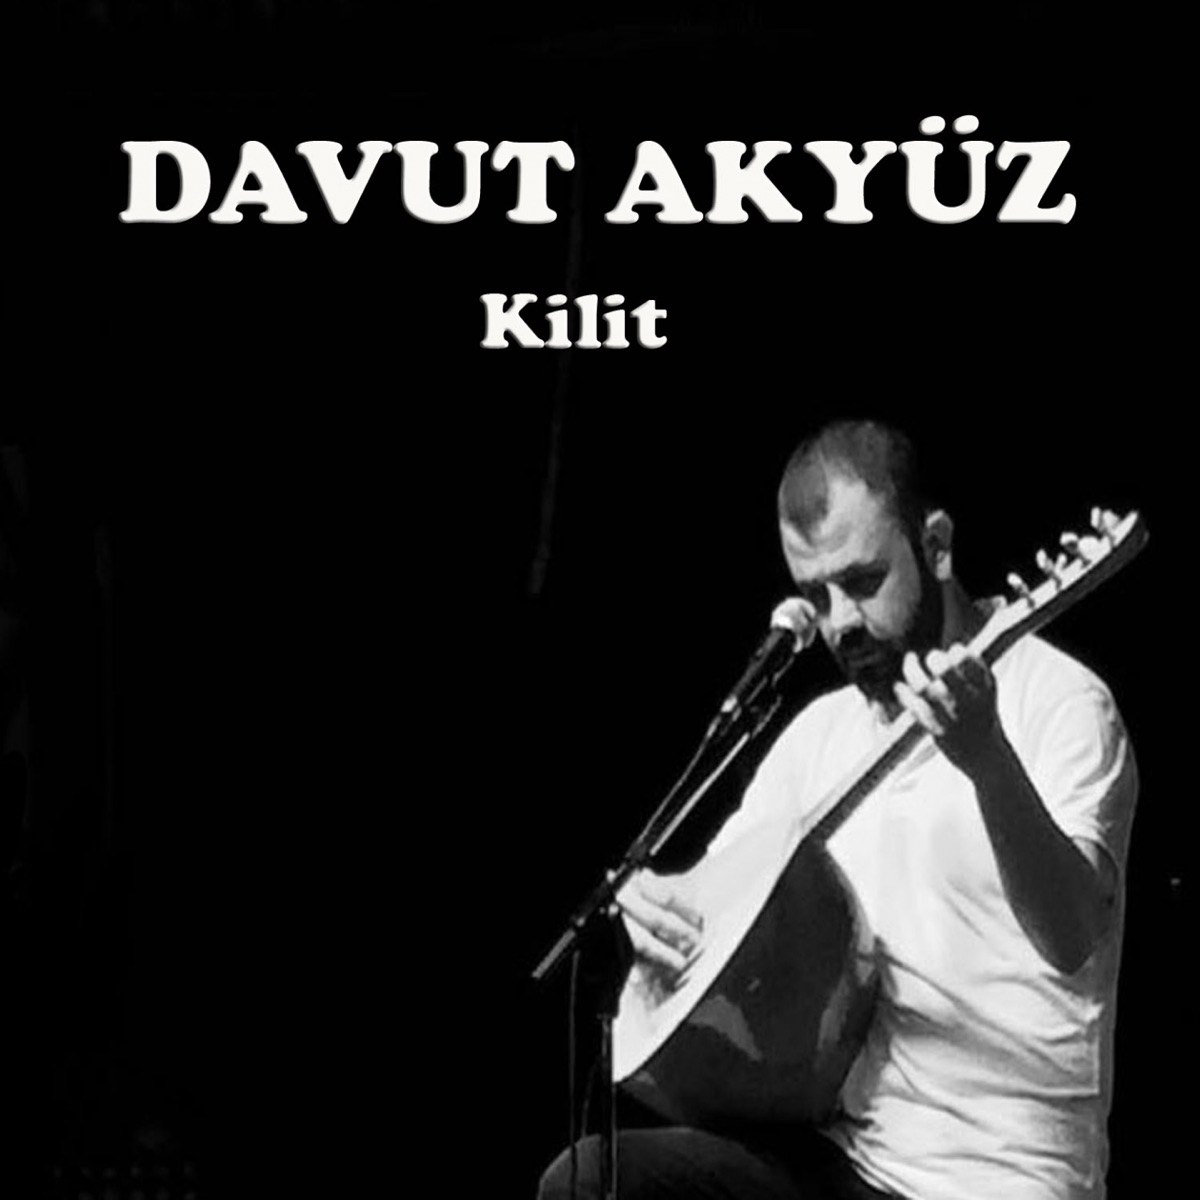 Kilit - EP - Album by Davutcan Akyüz - Apple Music